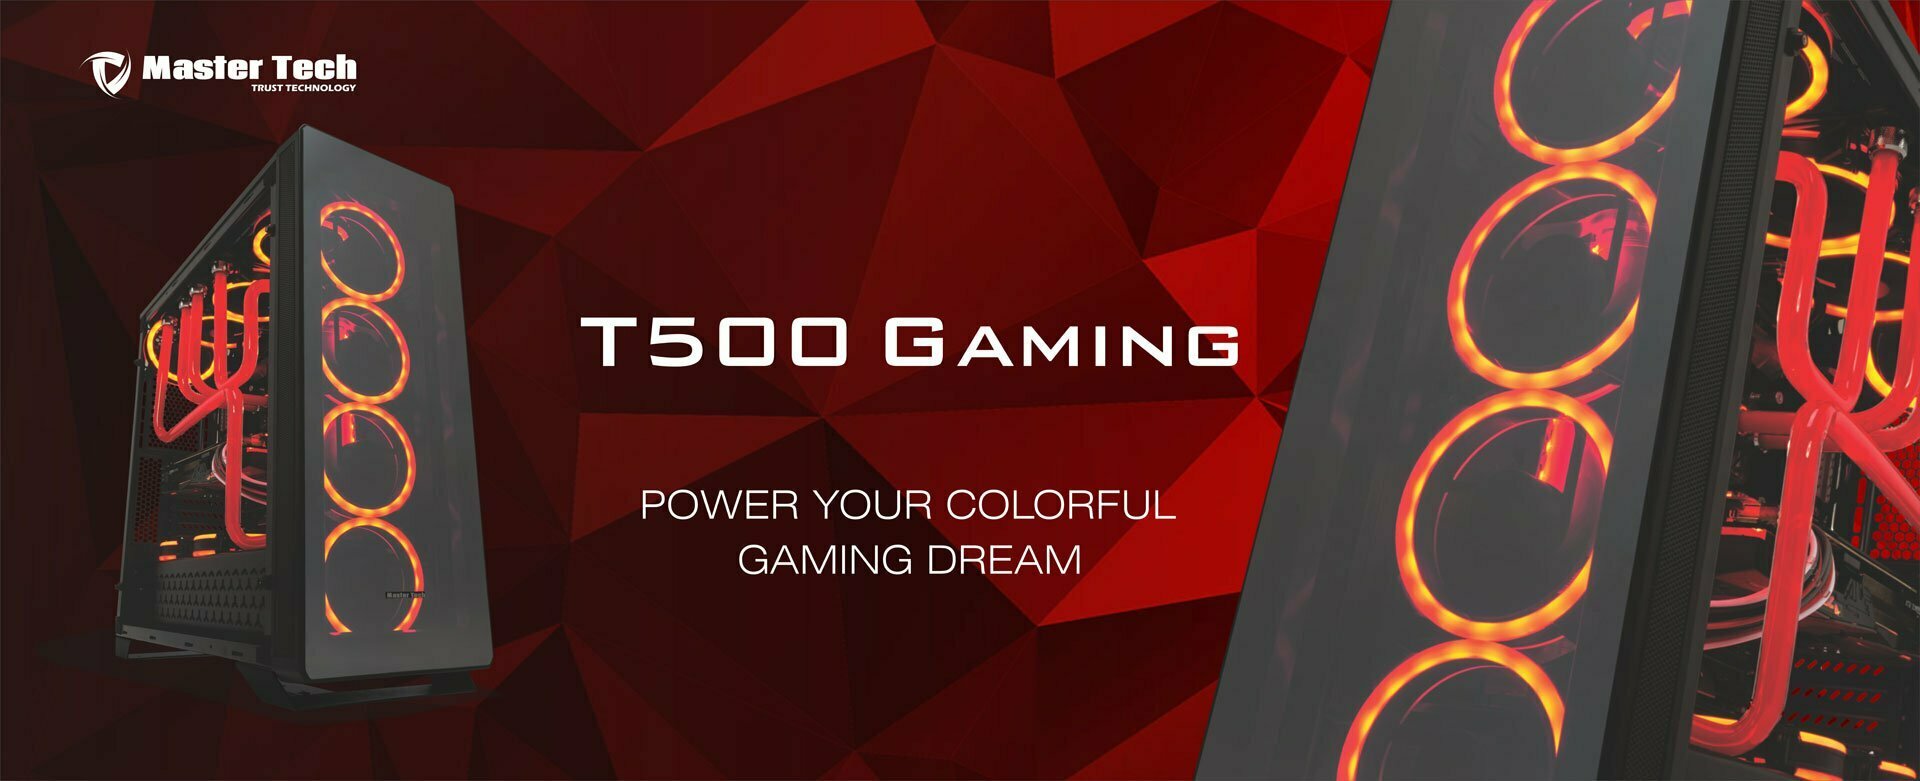 MasterTech T500 Gaming